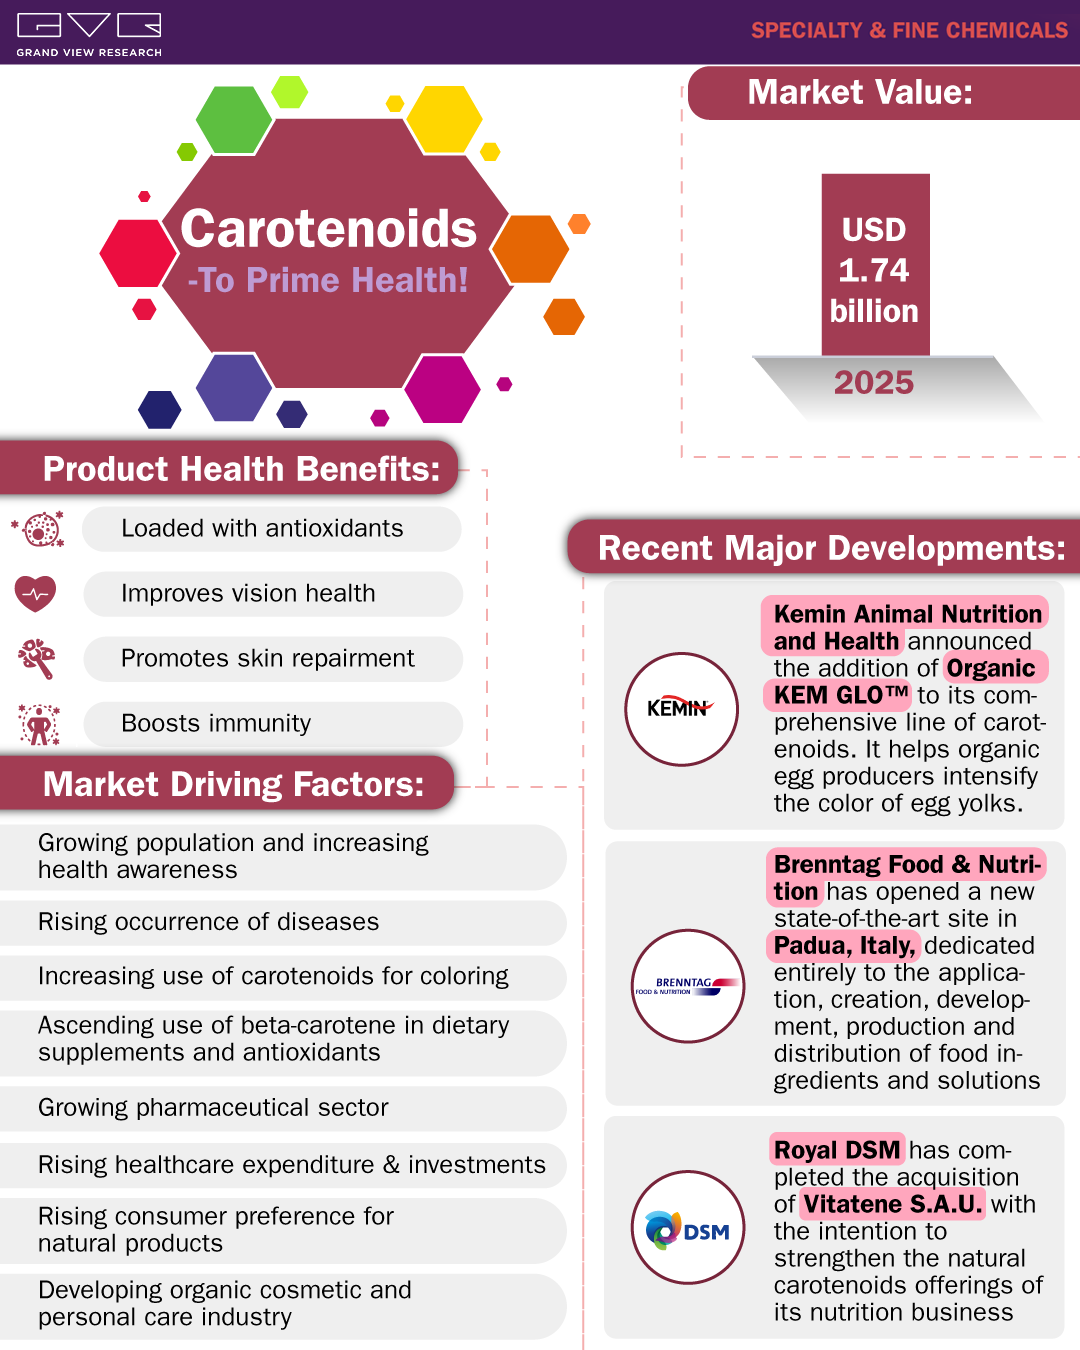 Carotenoids Market